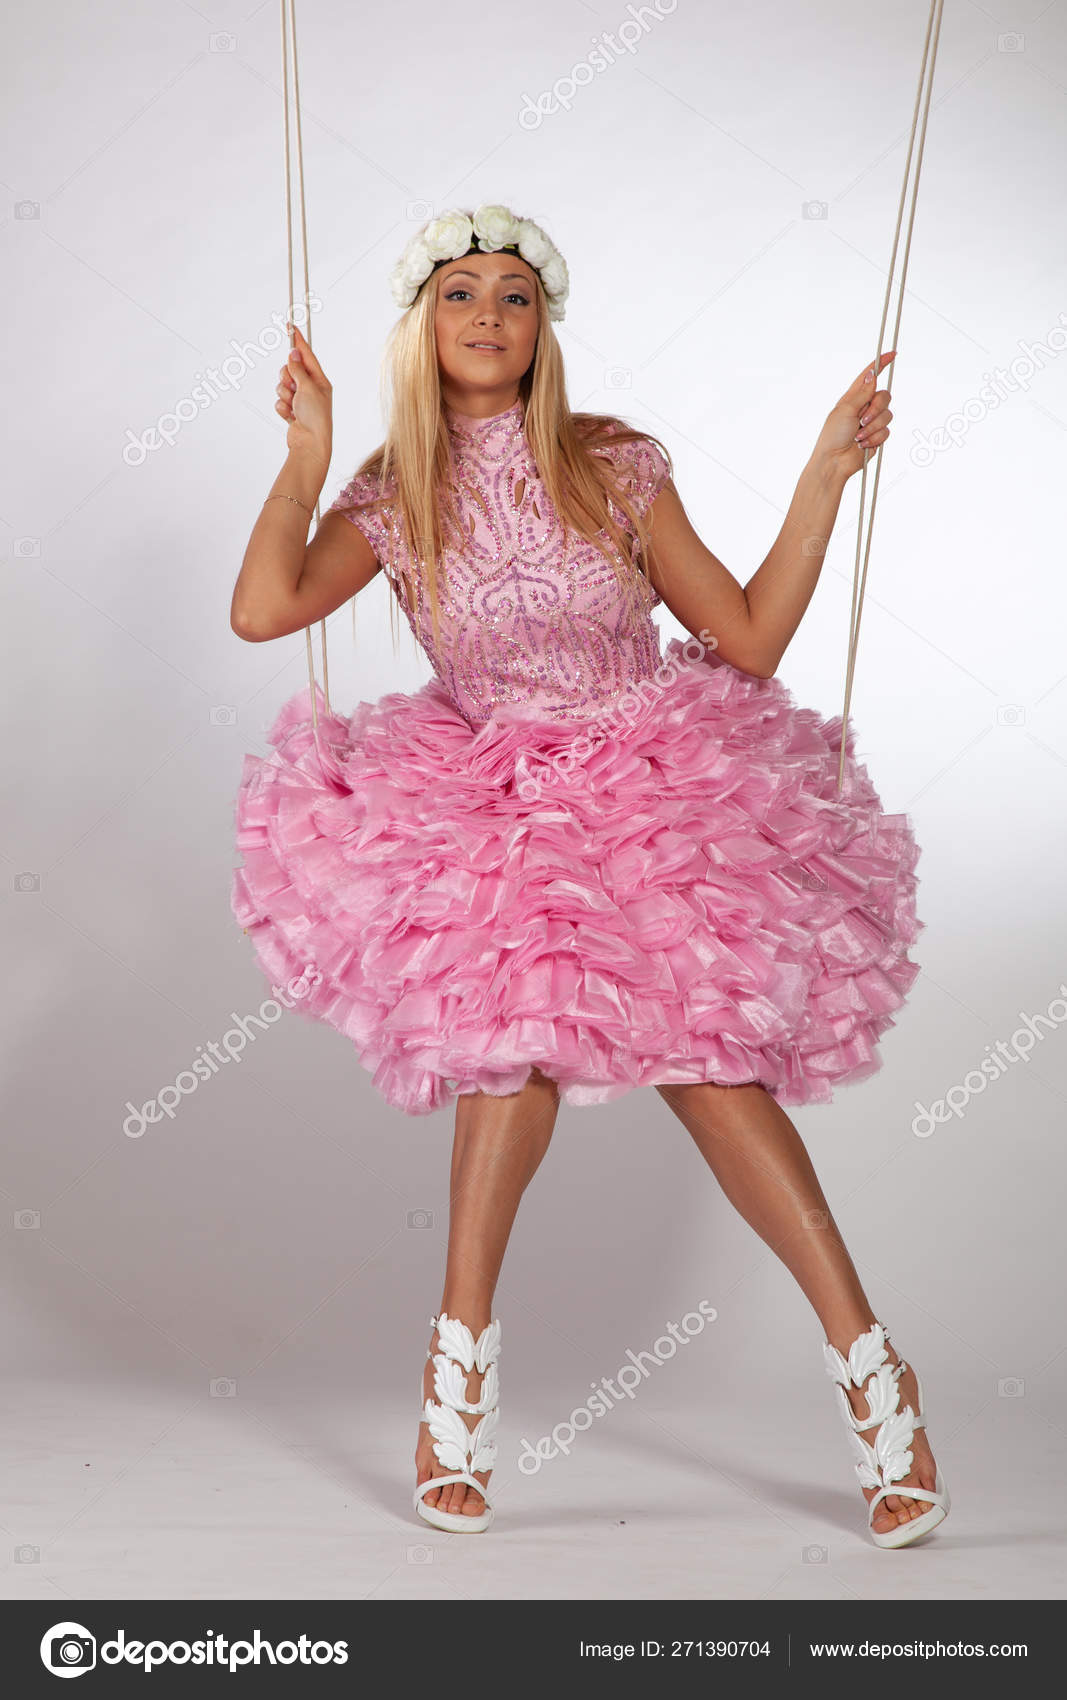 https://st4.depositphotos.com/10086424/27139/i/1600/depositphotos_271390704-stock-photo-girl-swinging-swing-studio-pink.jpg